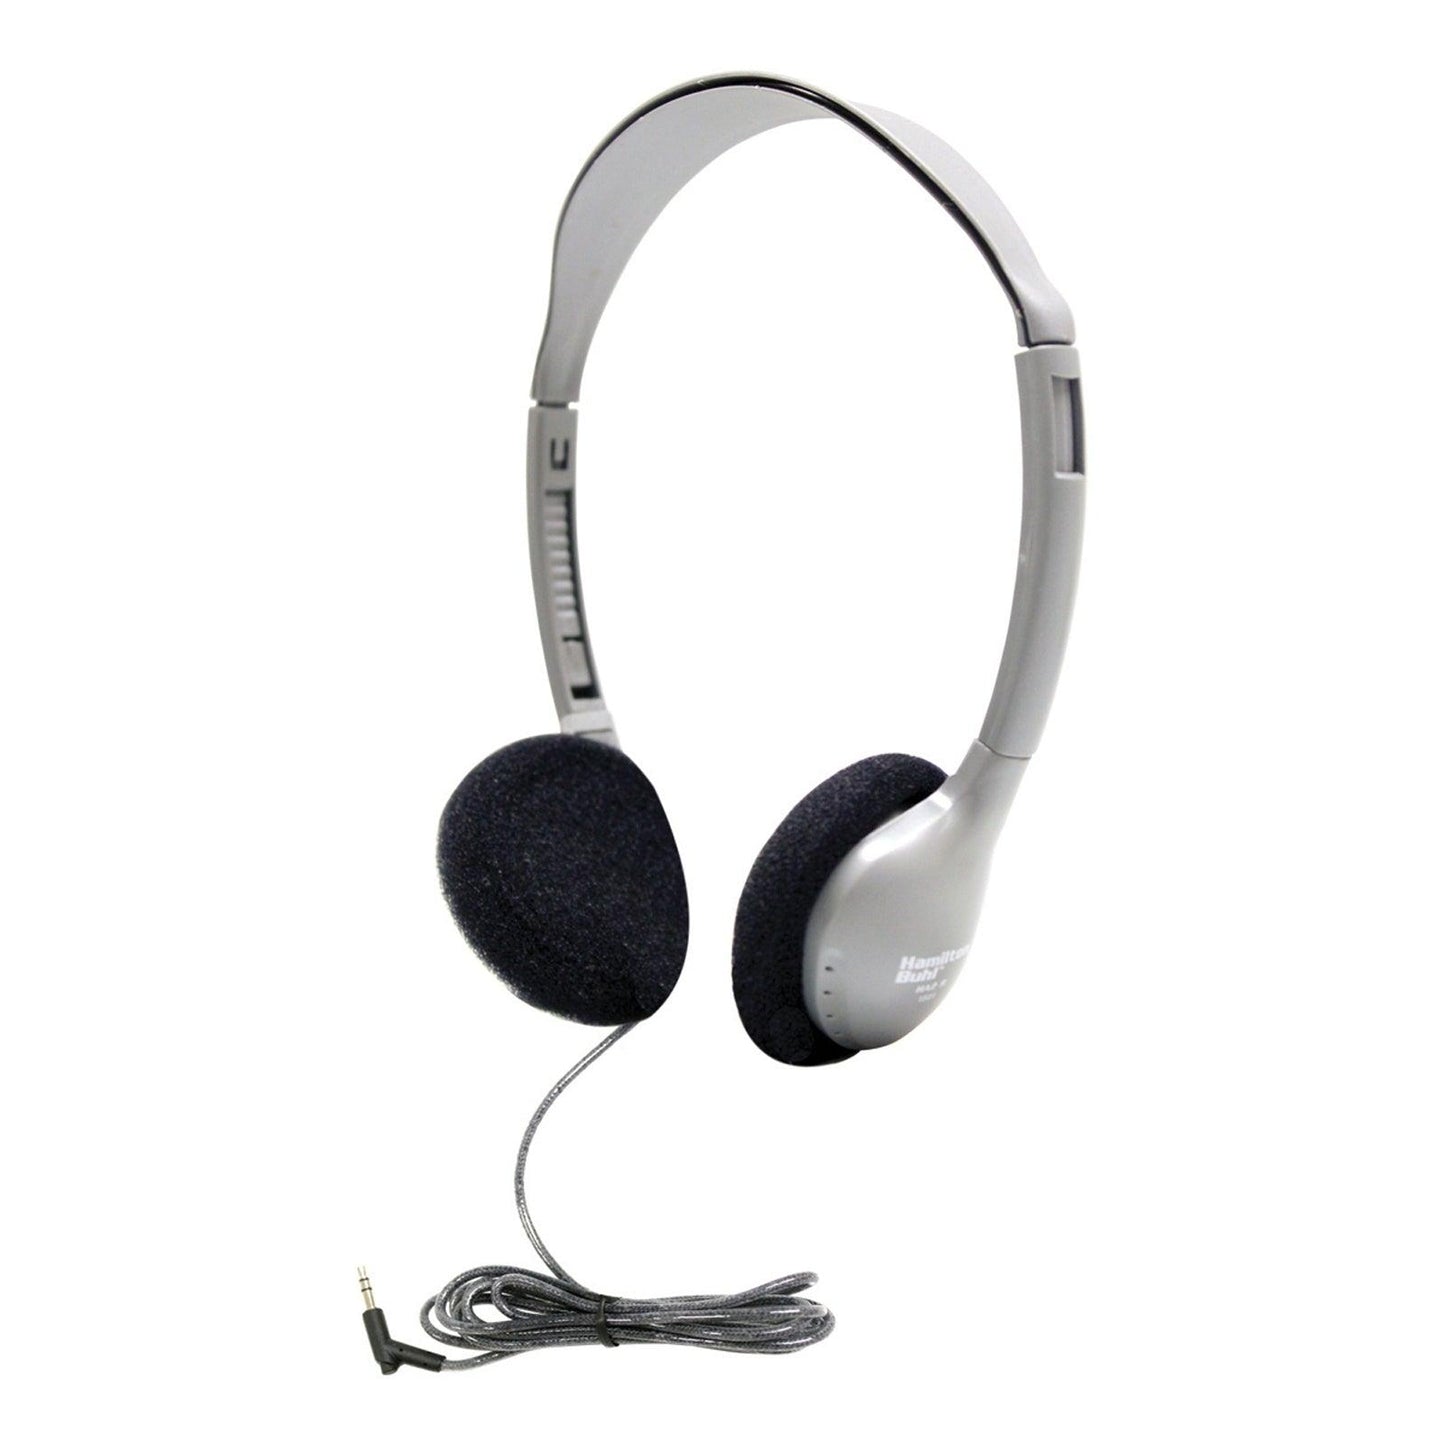 Personal On-Ear Stereo Headphone, Pack of 2 - Loomini